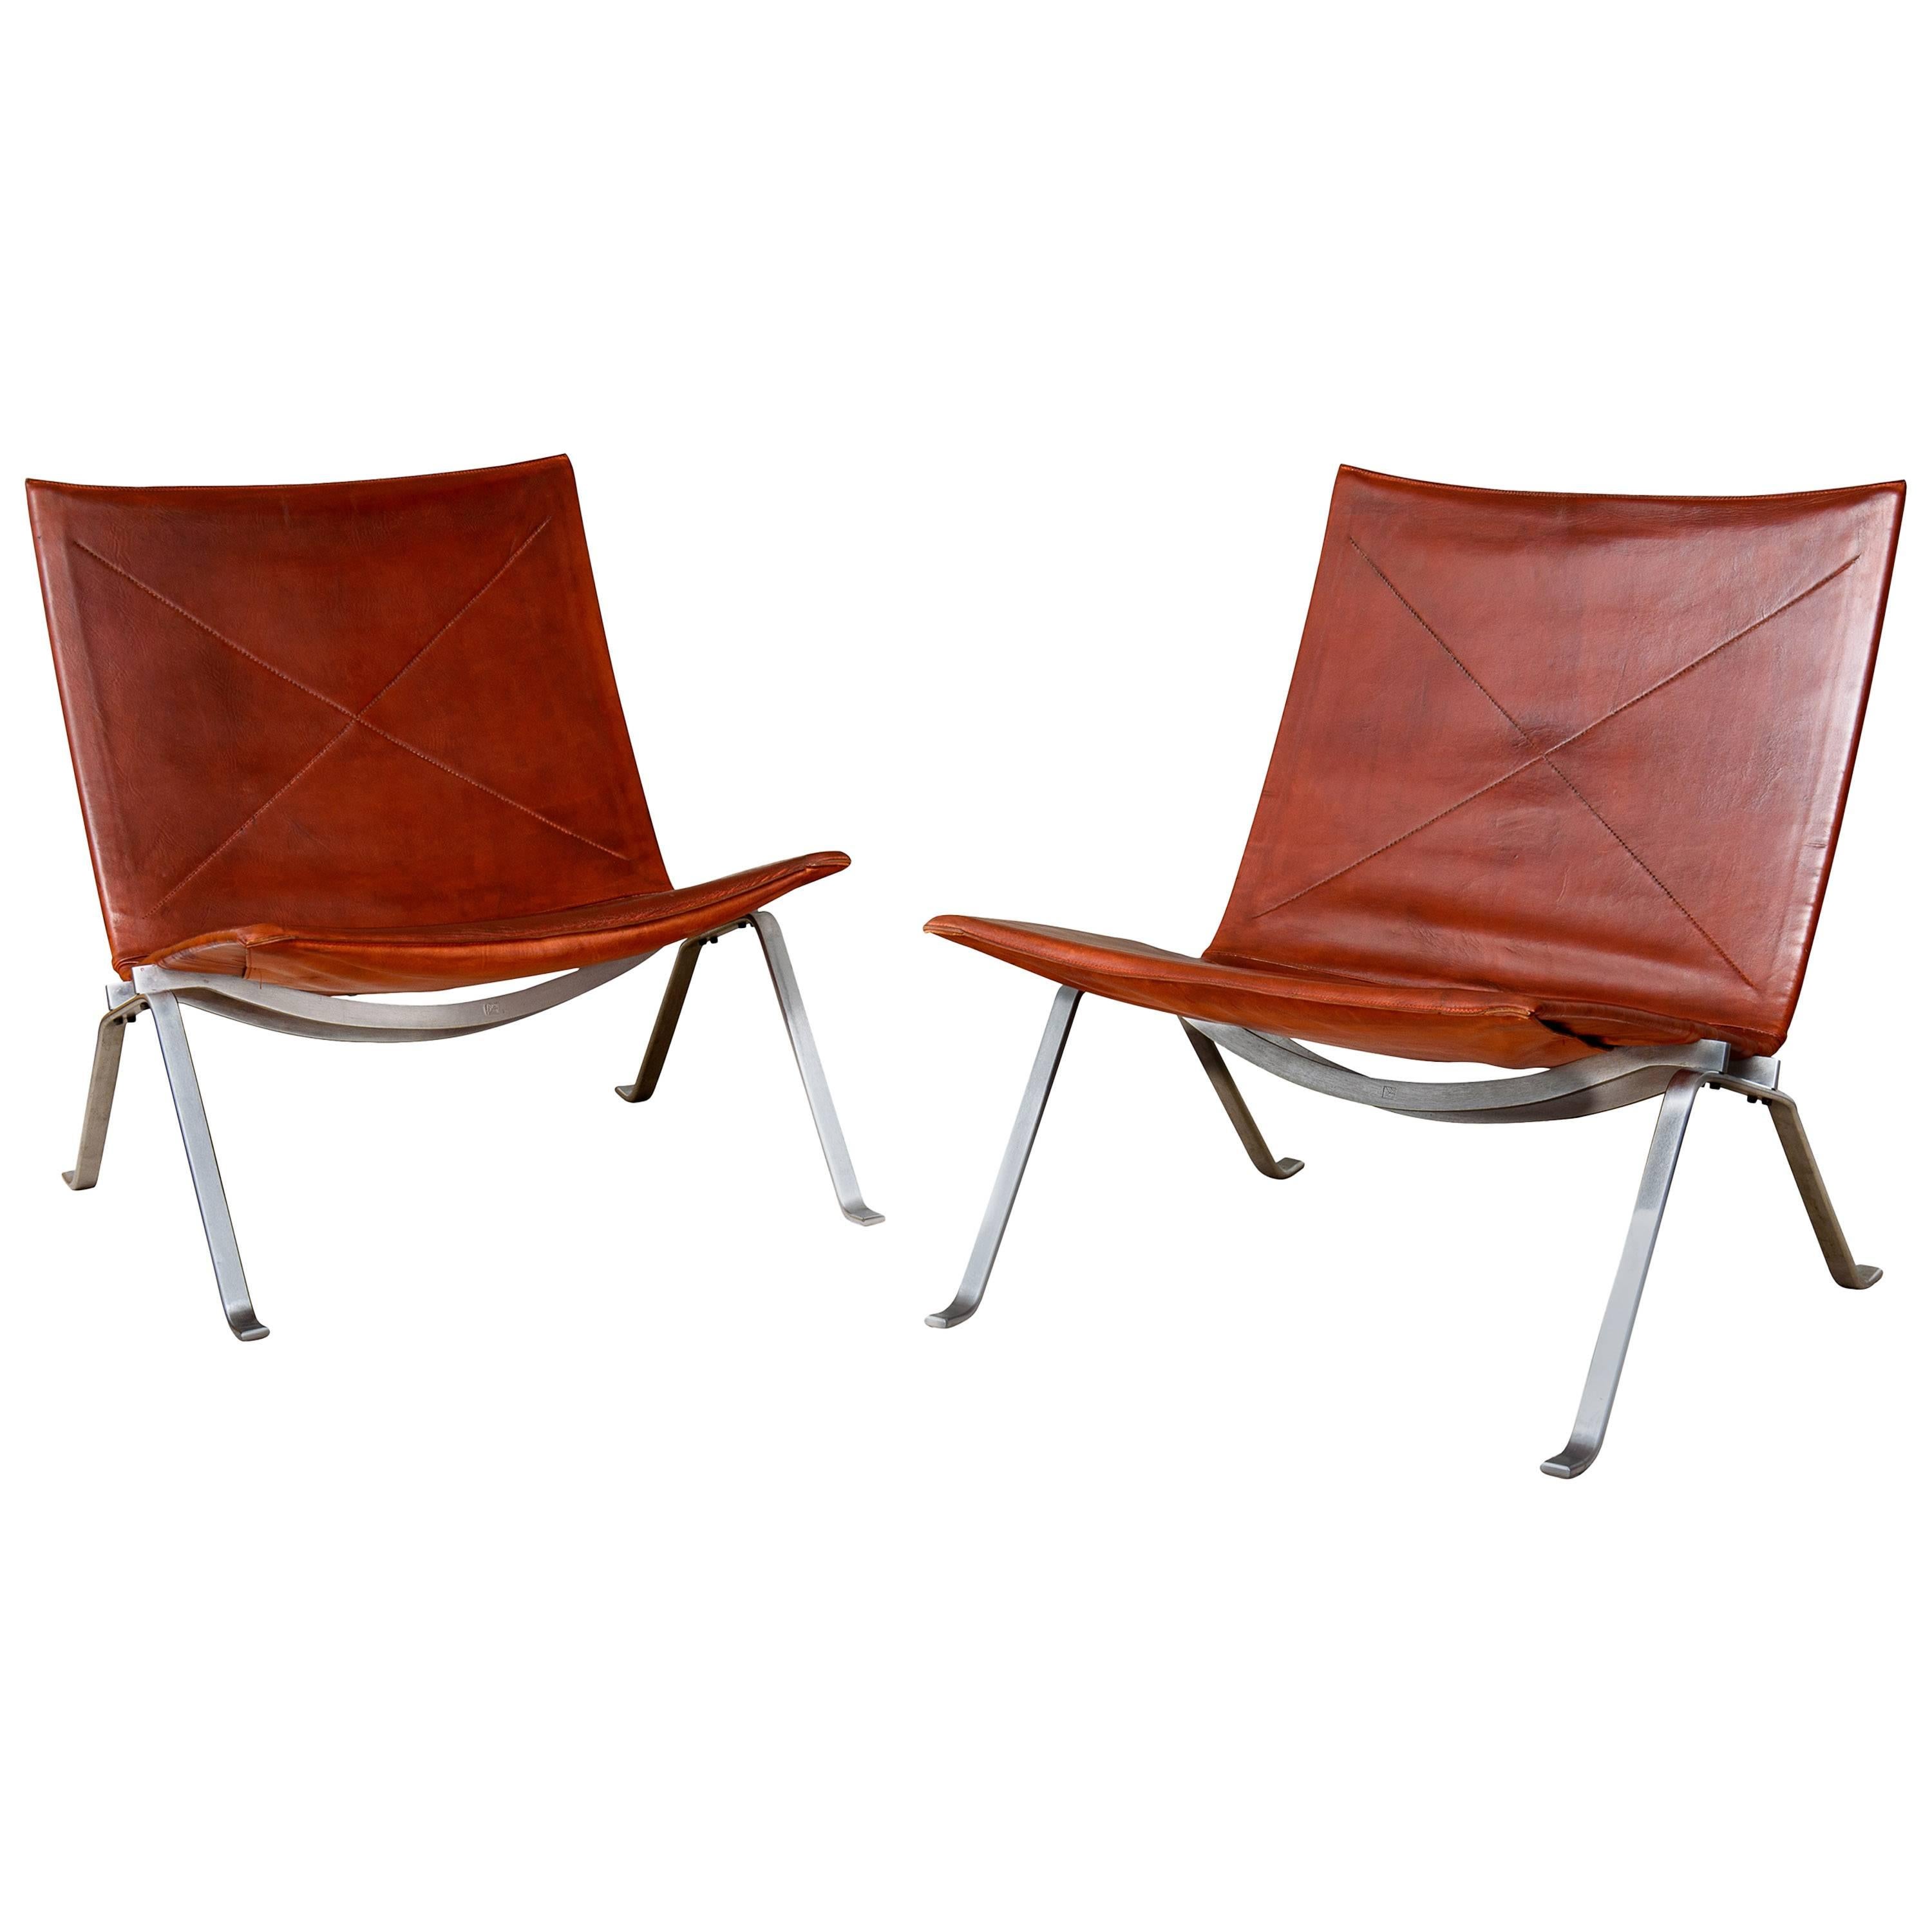 Pair of Lounge Chairs ‘PK-22’ by Poul Kjaerholm, Denmark, 1955